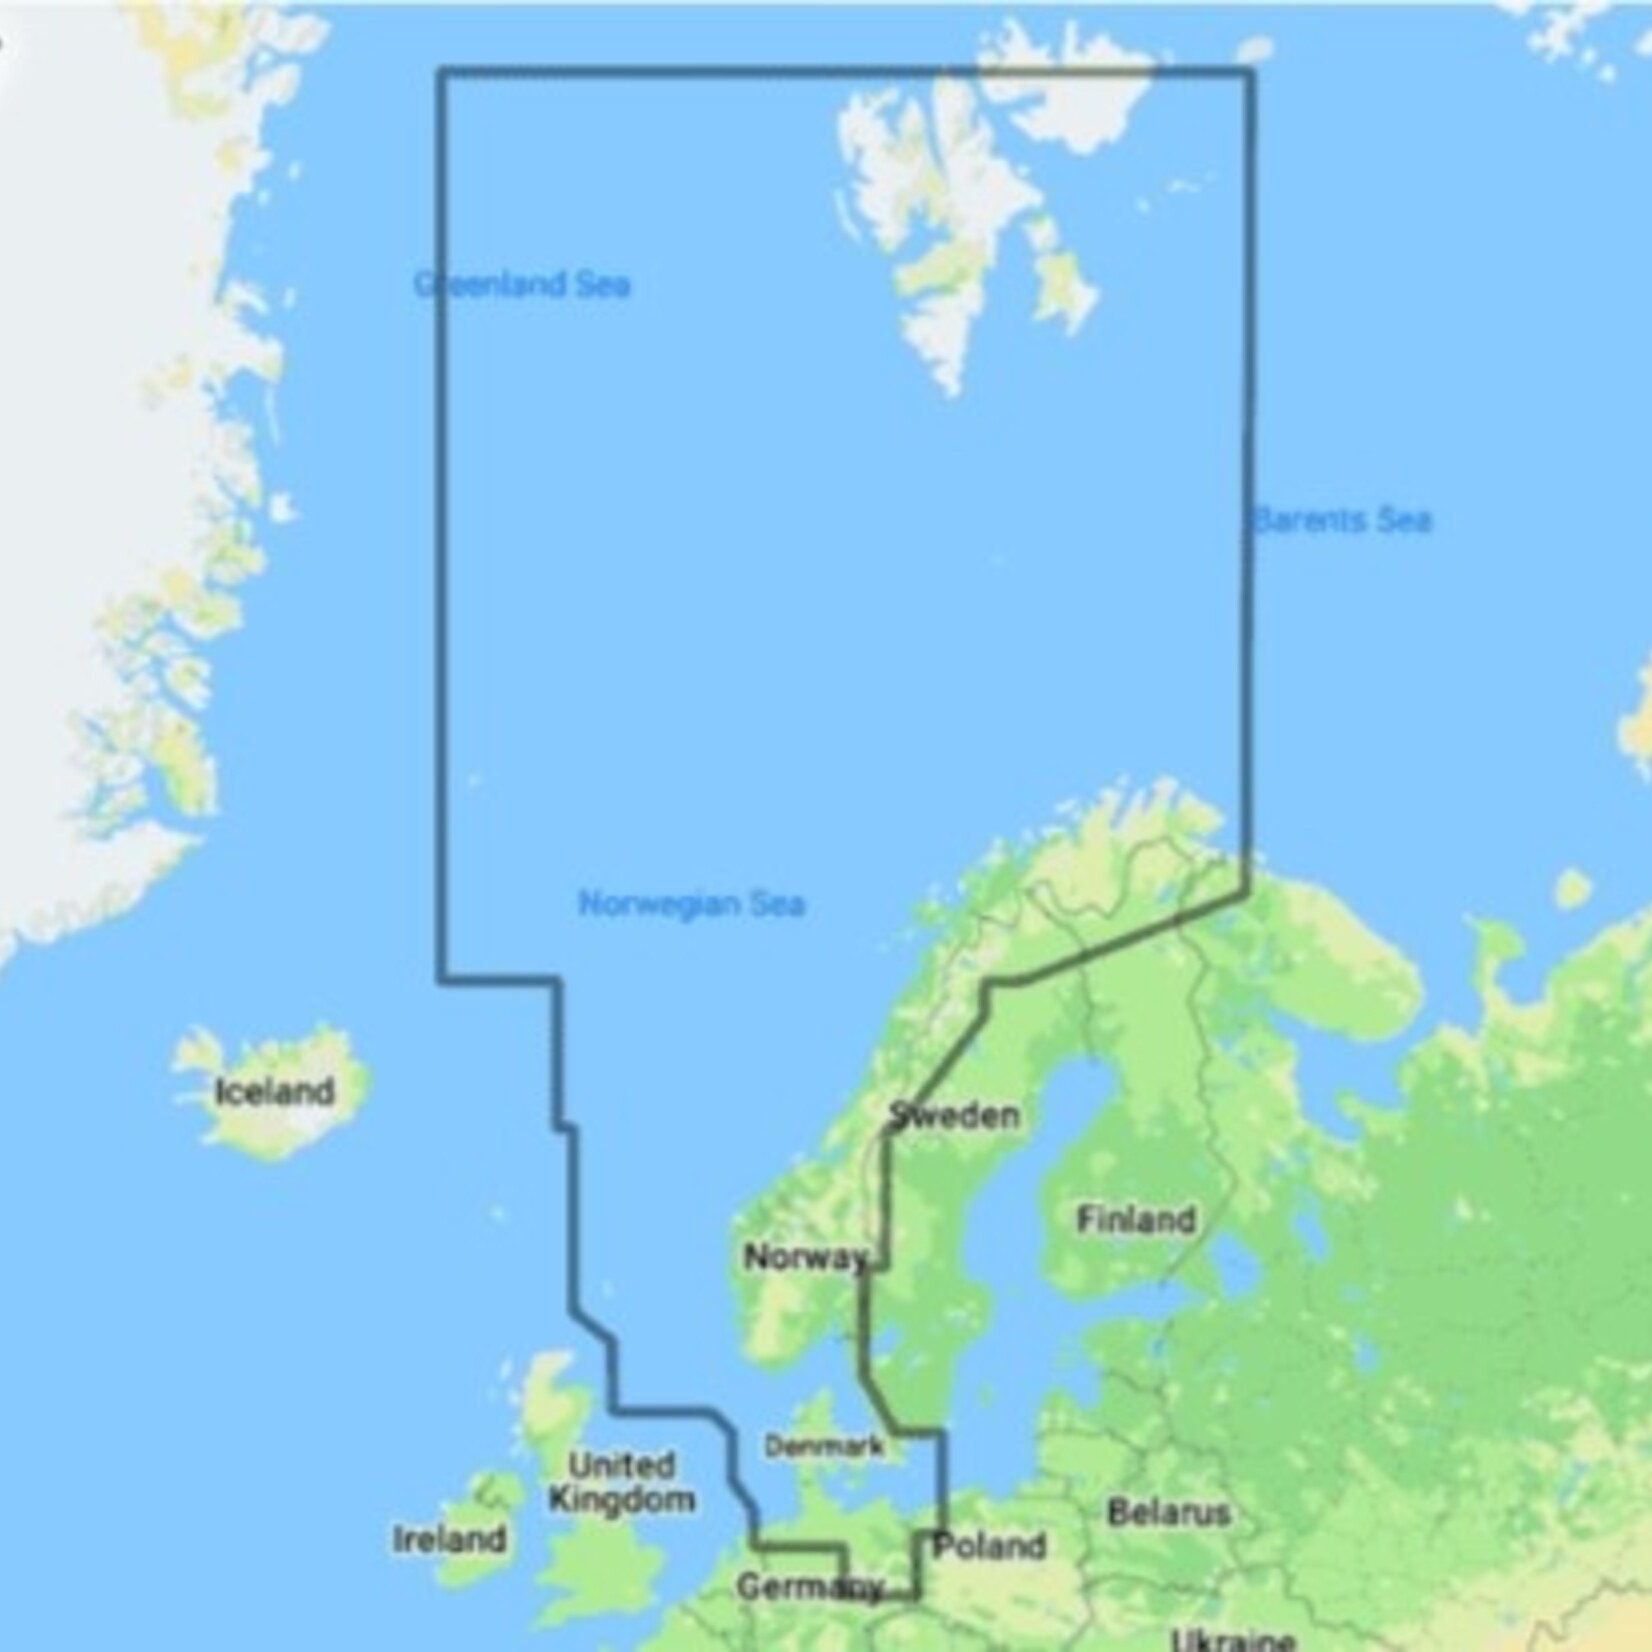 C-MAP REVEAL - North Sea & Denmark